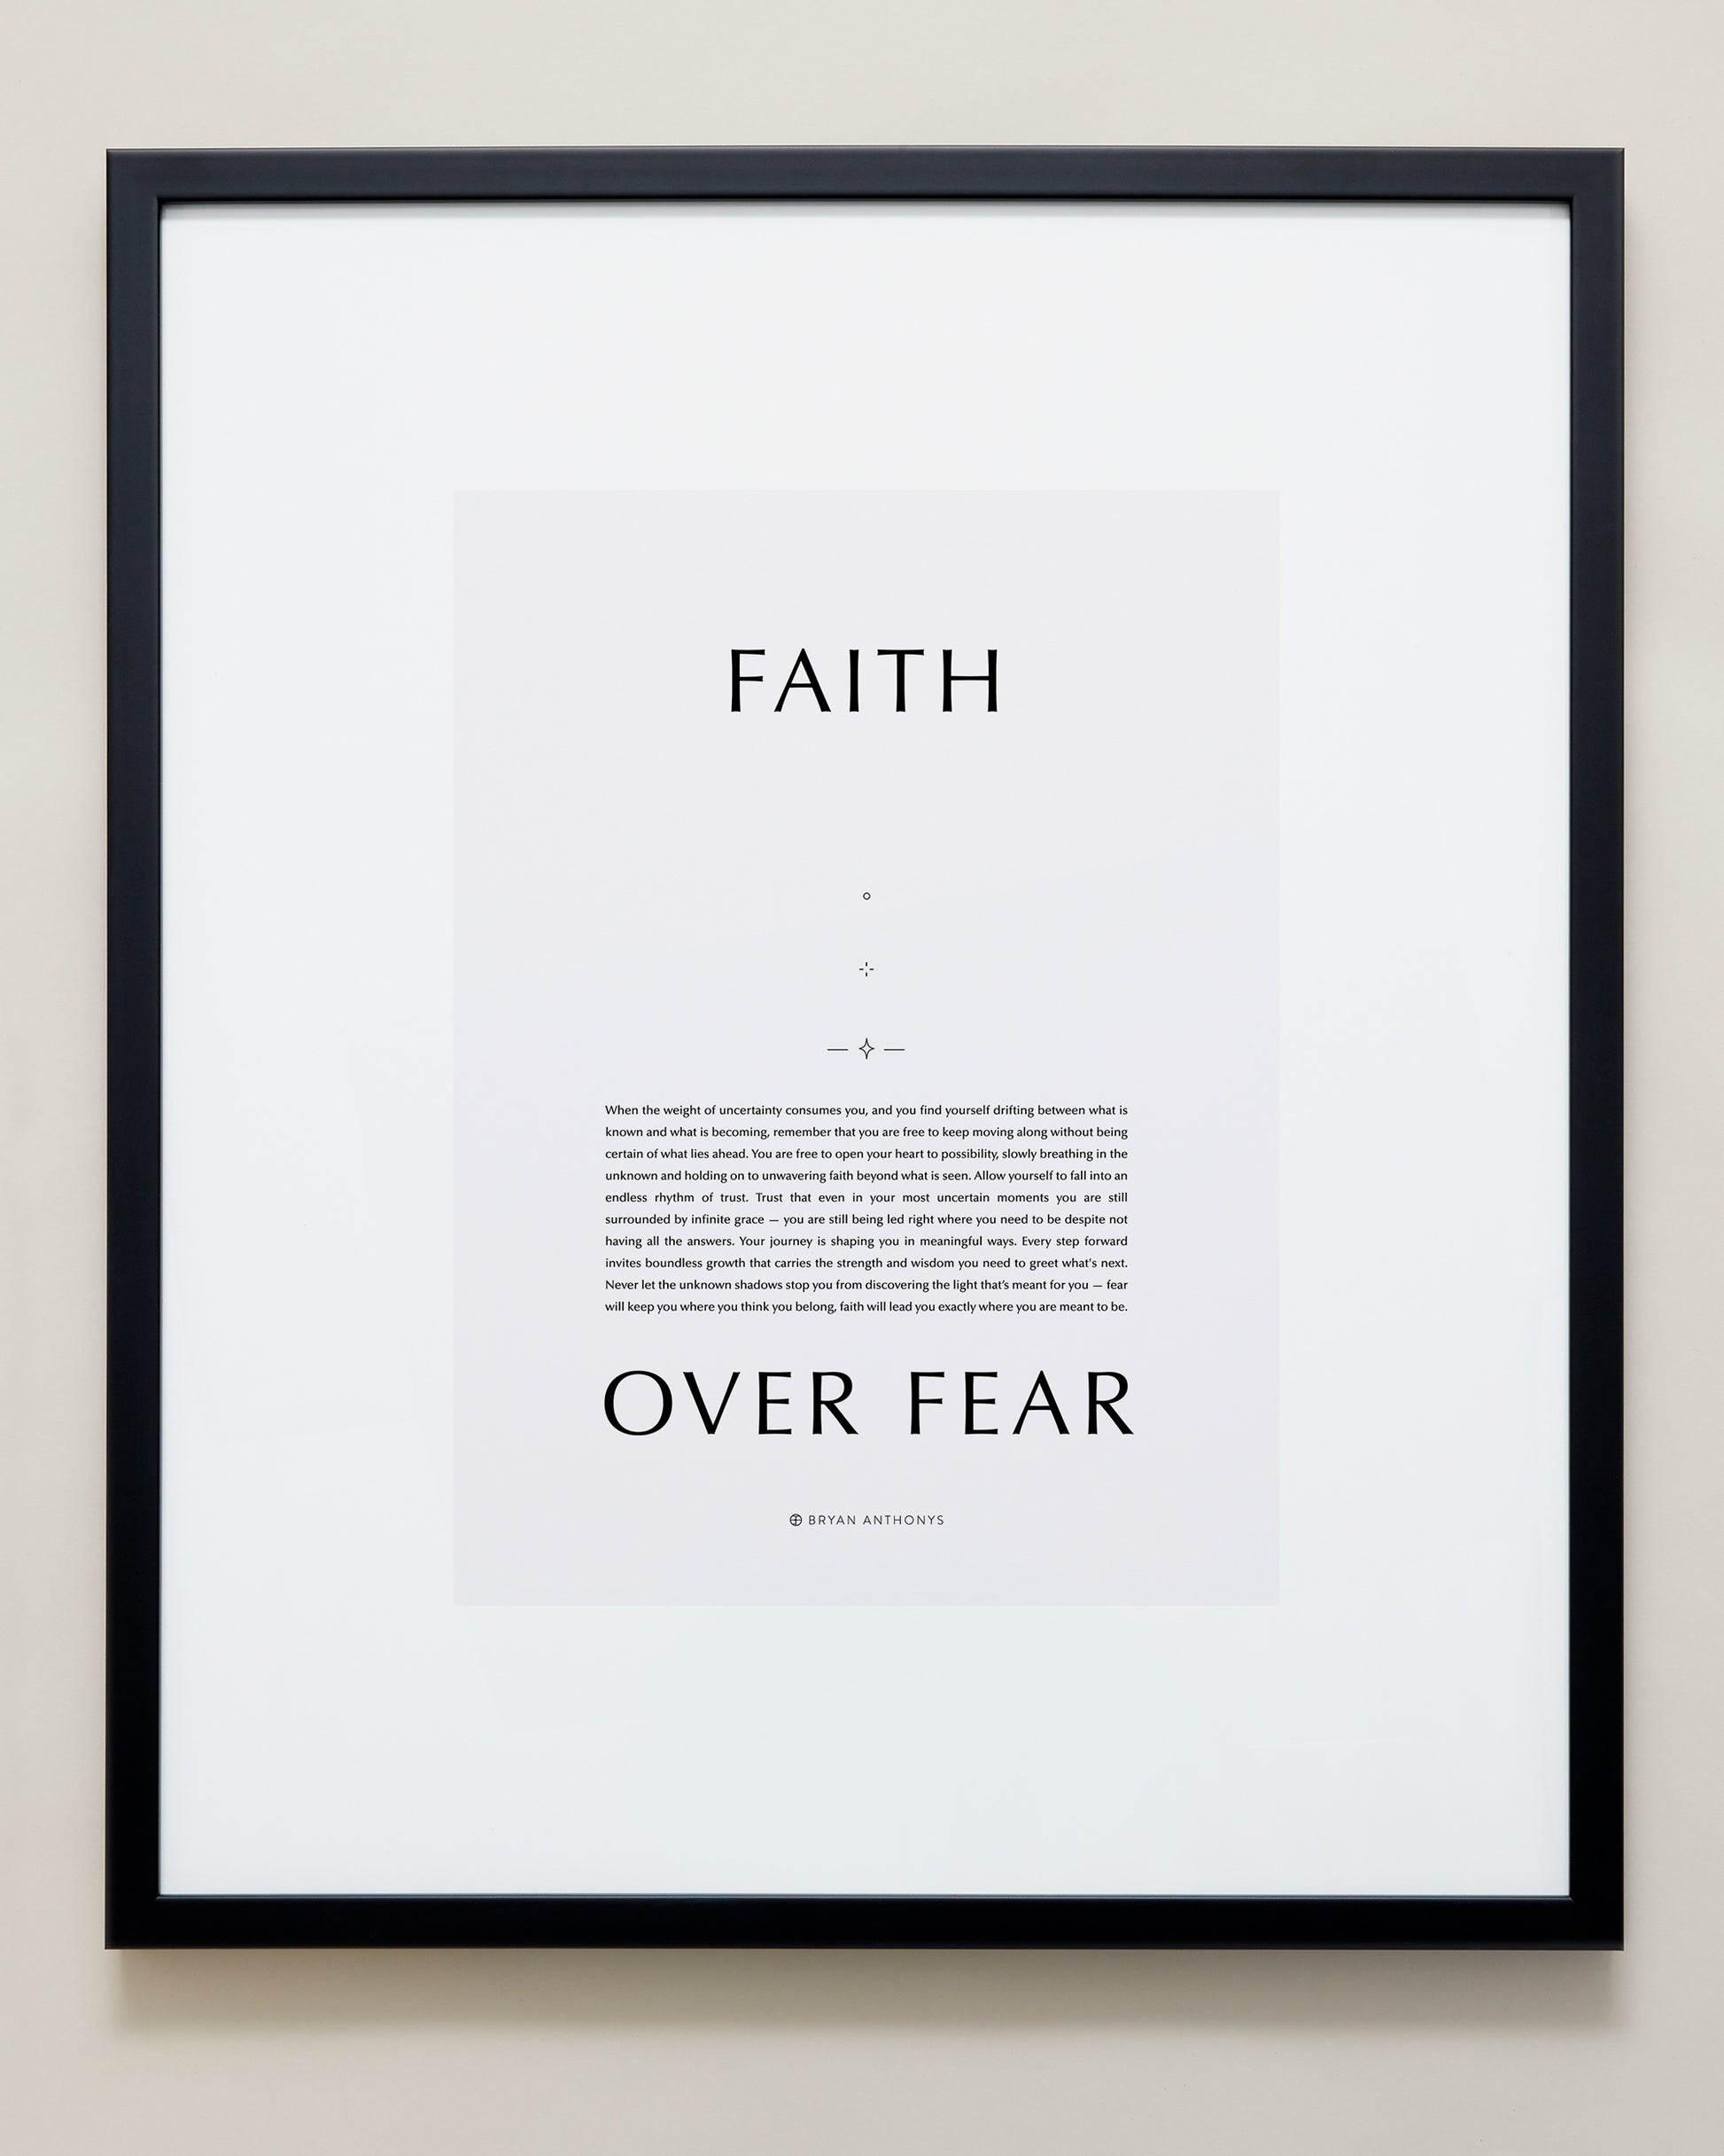 Bryan Anthonys Home Decor Purposeful Prints Faith Over Fear Iconic Framed Print Gray Art Black Frame 20x24